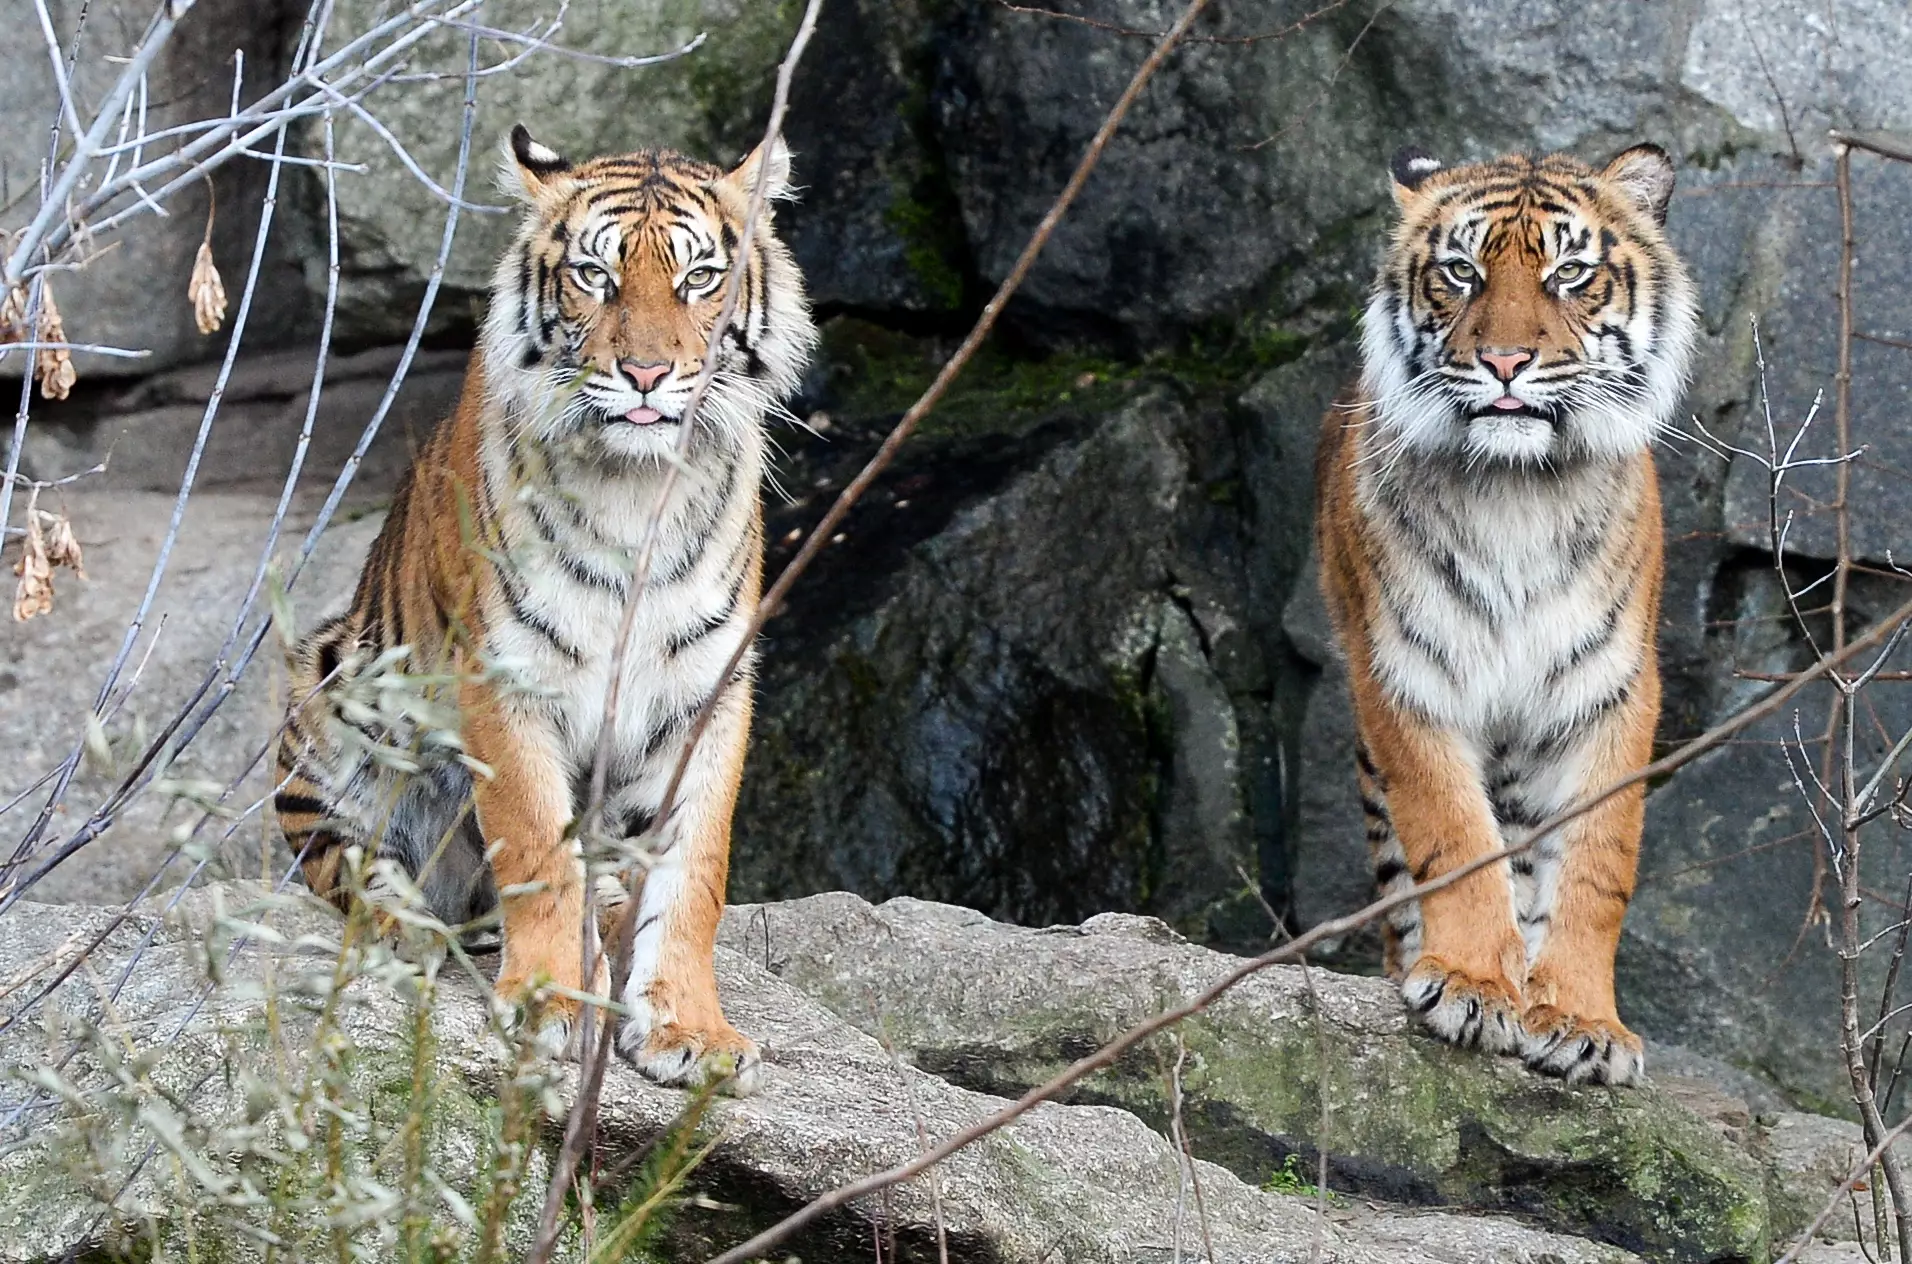 Stock image of two Sumatran tigers.